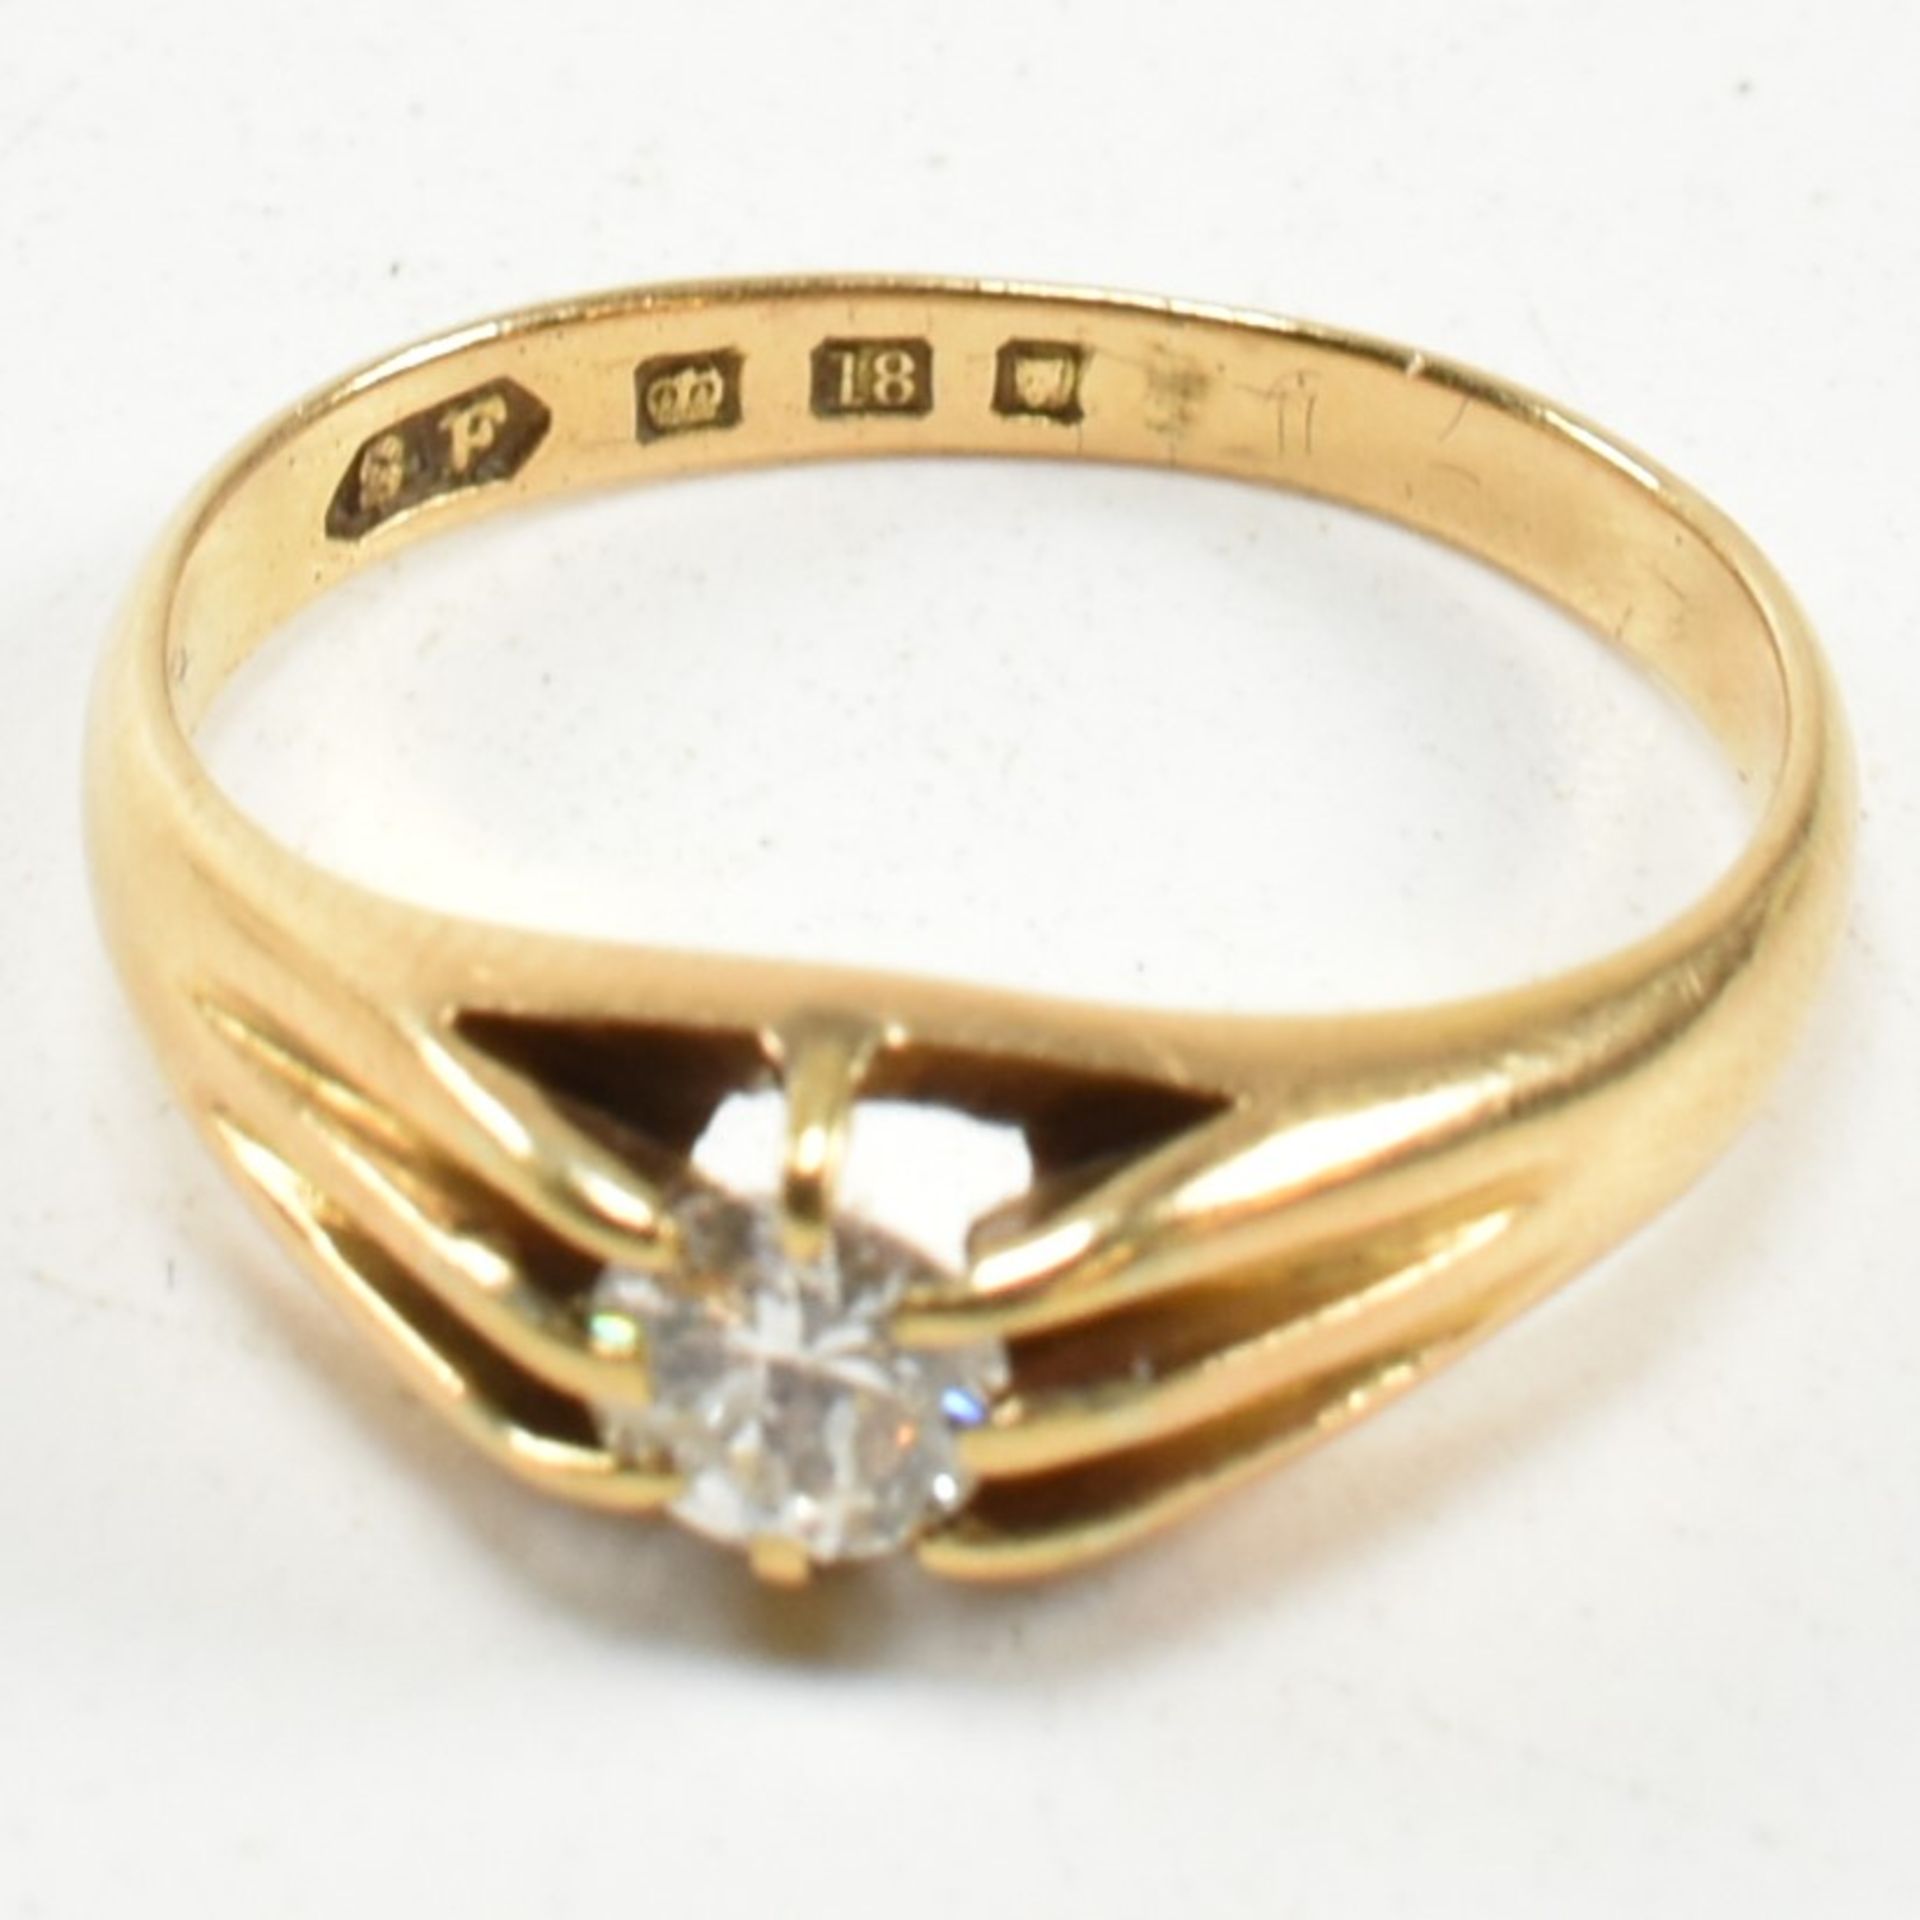 HALLMARKED 18CT GOLD & DIAMOND RING - Image 7 of 8